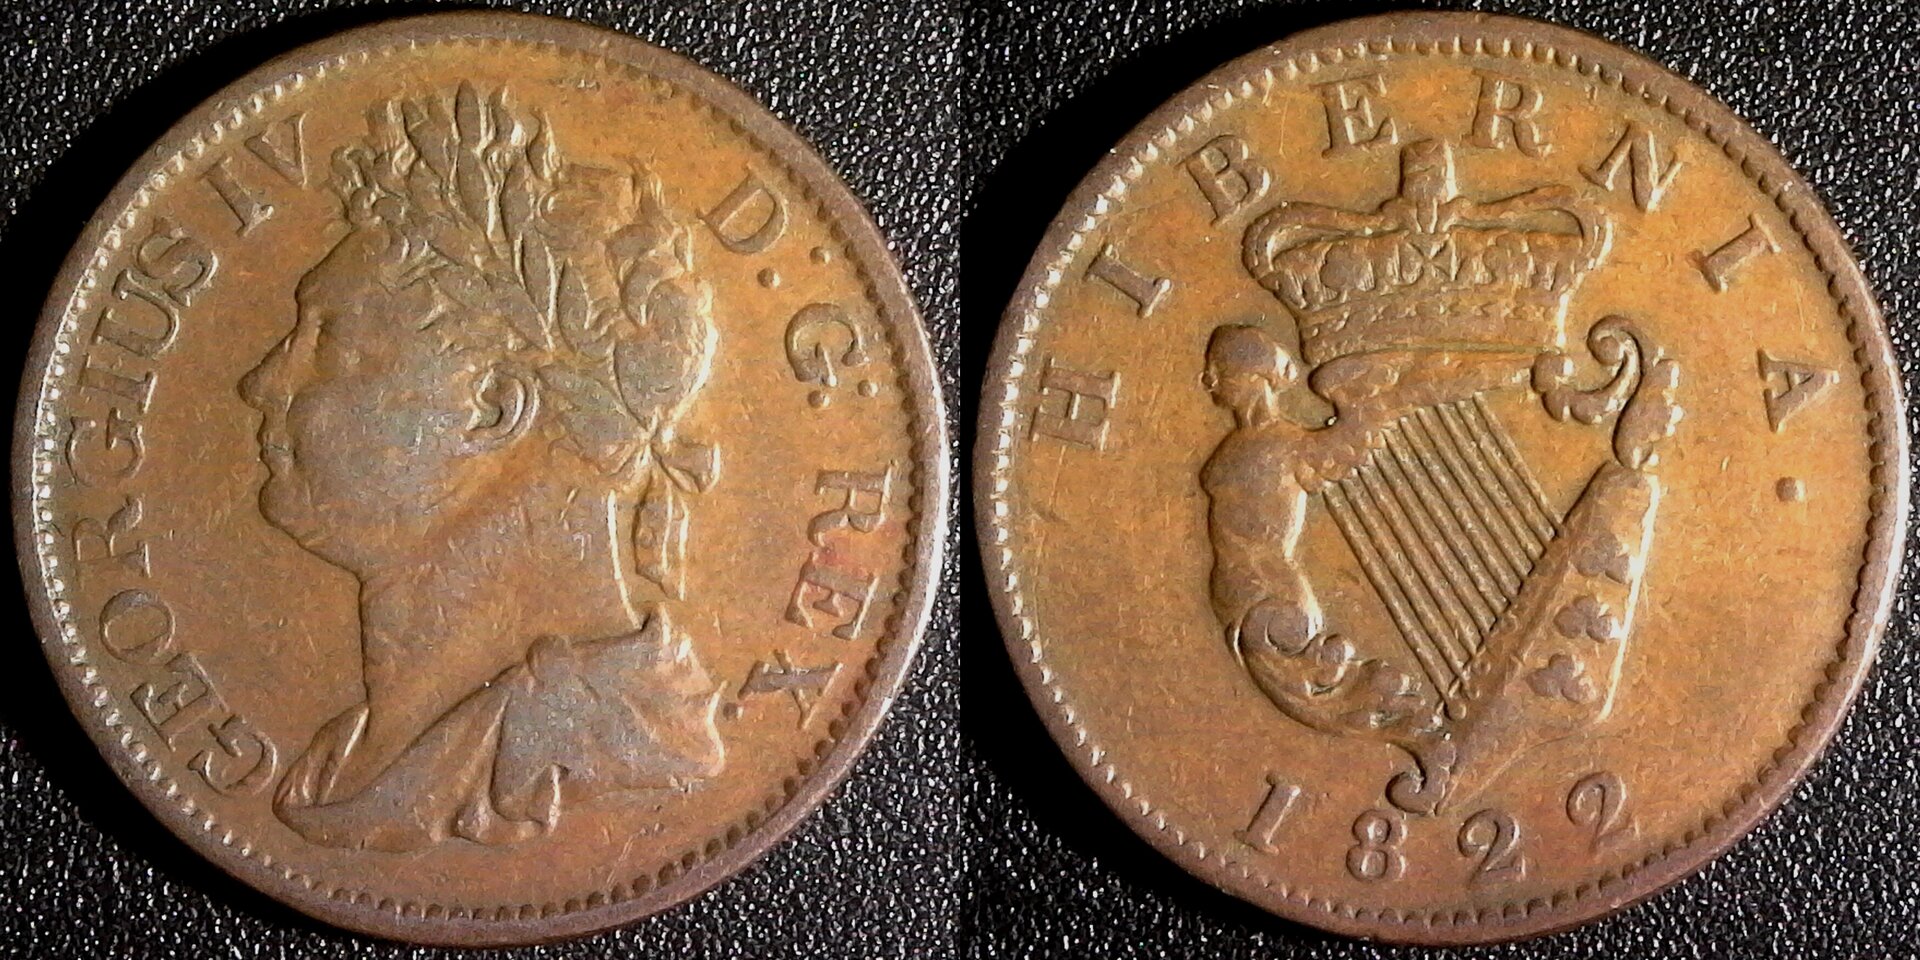 Ireland Half Penny 1822 obv-side.jpg